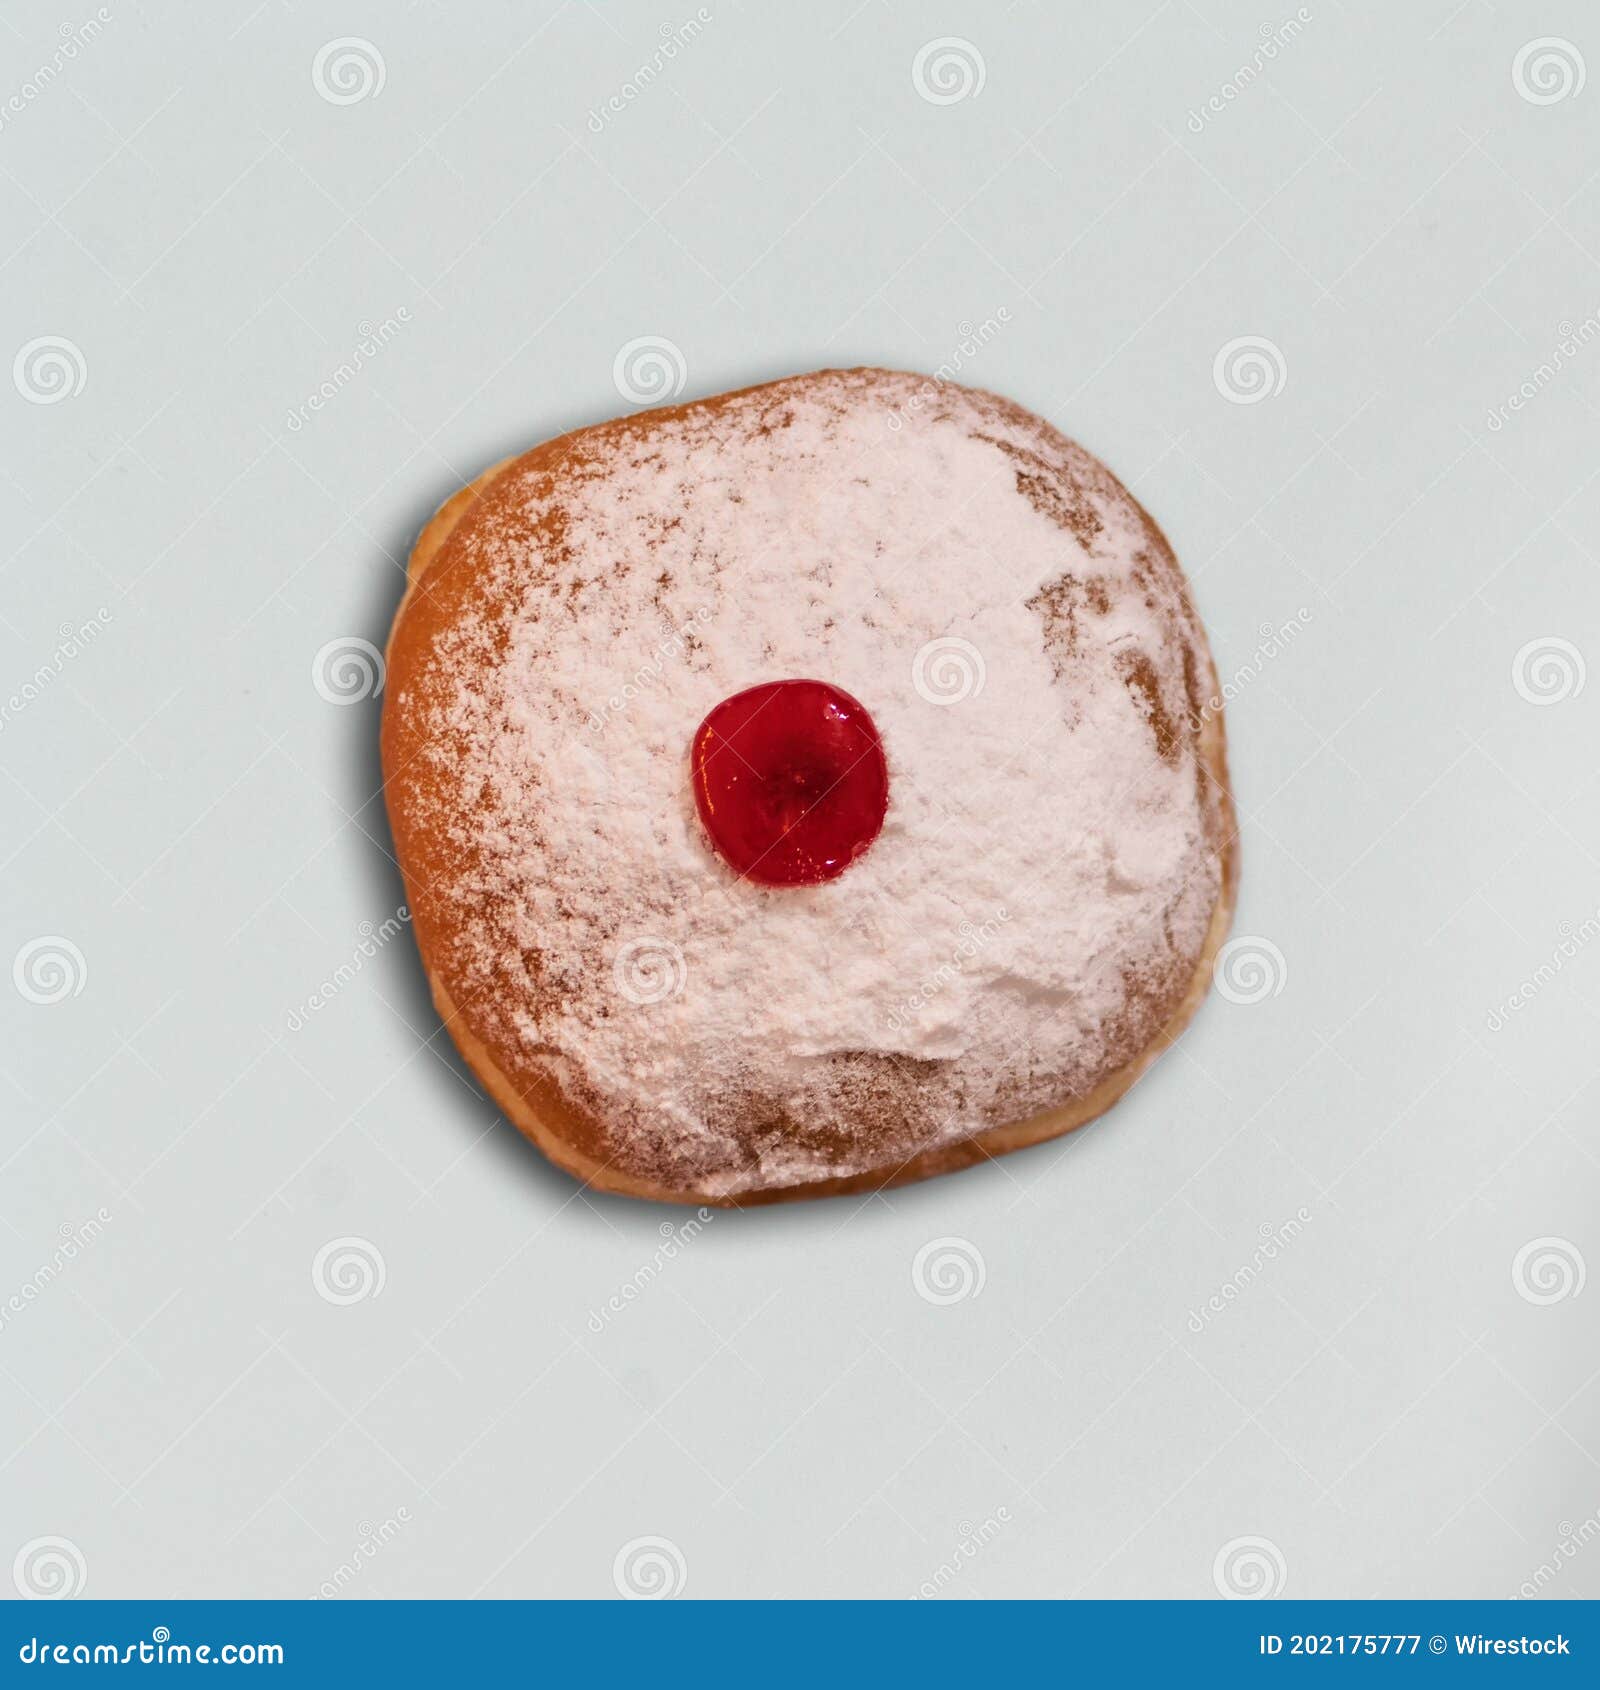 top view closeup of a hanukkah mocks sufganiyah doughnut